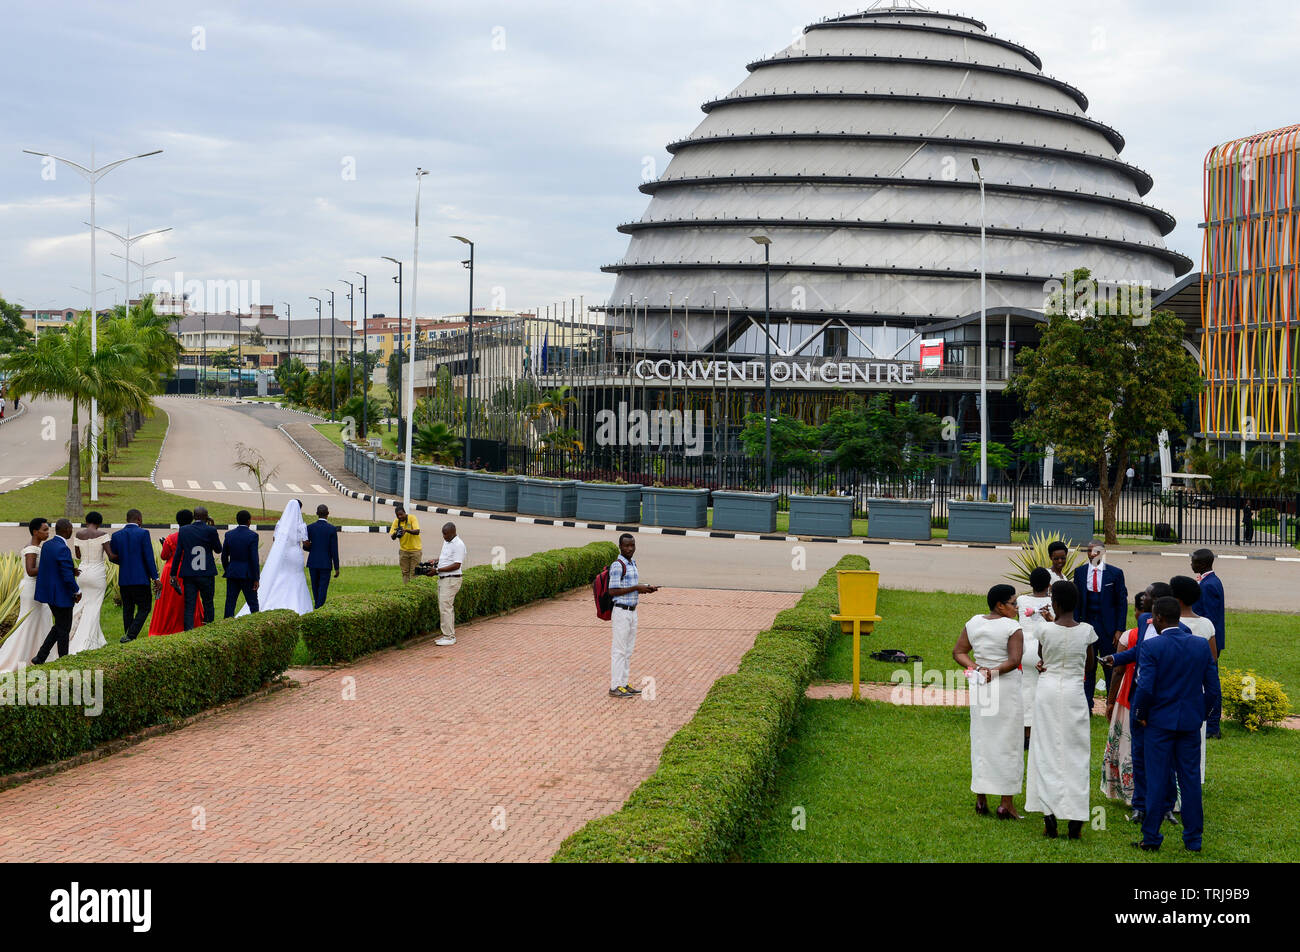 Il Ruanda, Kigali, centro congressi, spot per film e photoshooting per weeddings / RUANDA, Kigali, centro congressi, Kongresszentrum , Hochzeitspaare beim Fotoshooting Foto Stock